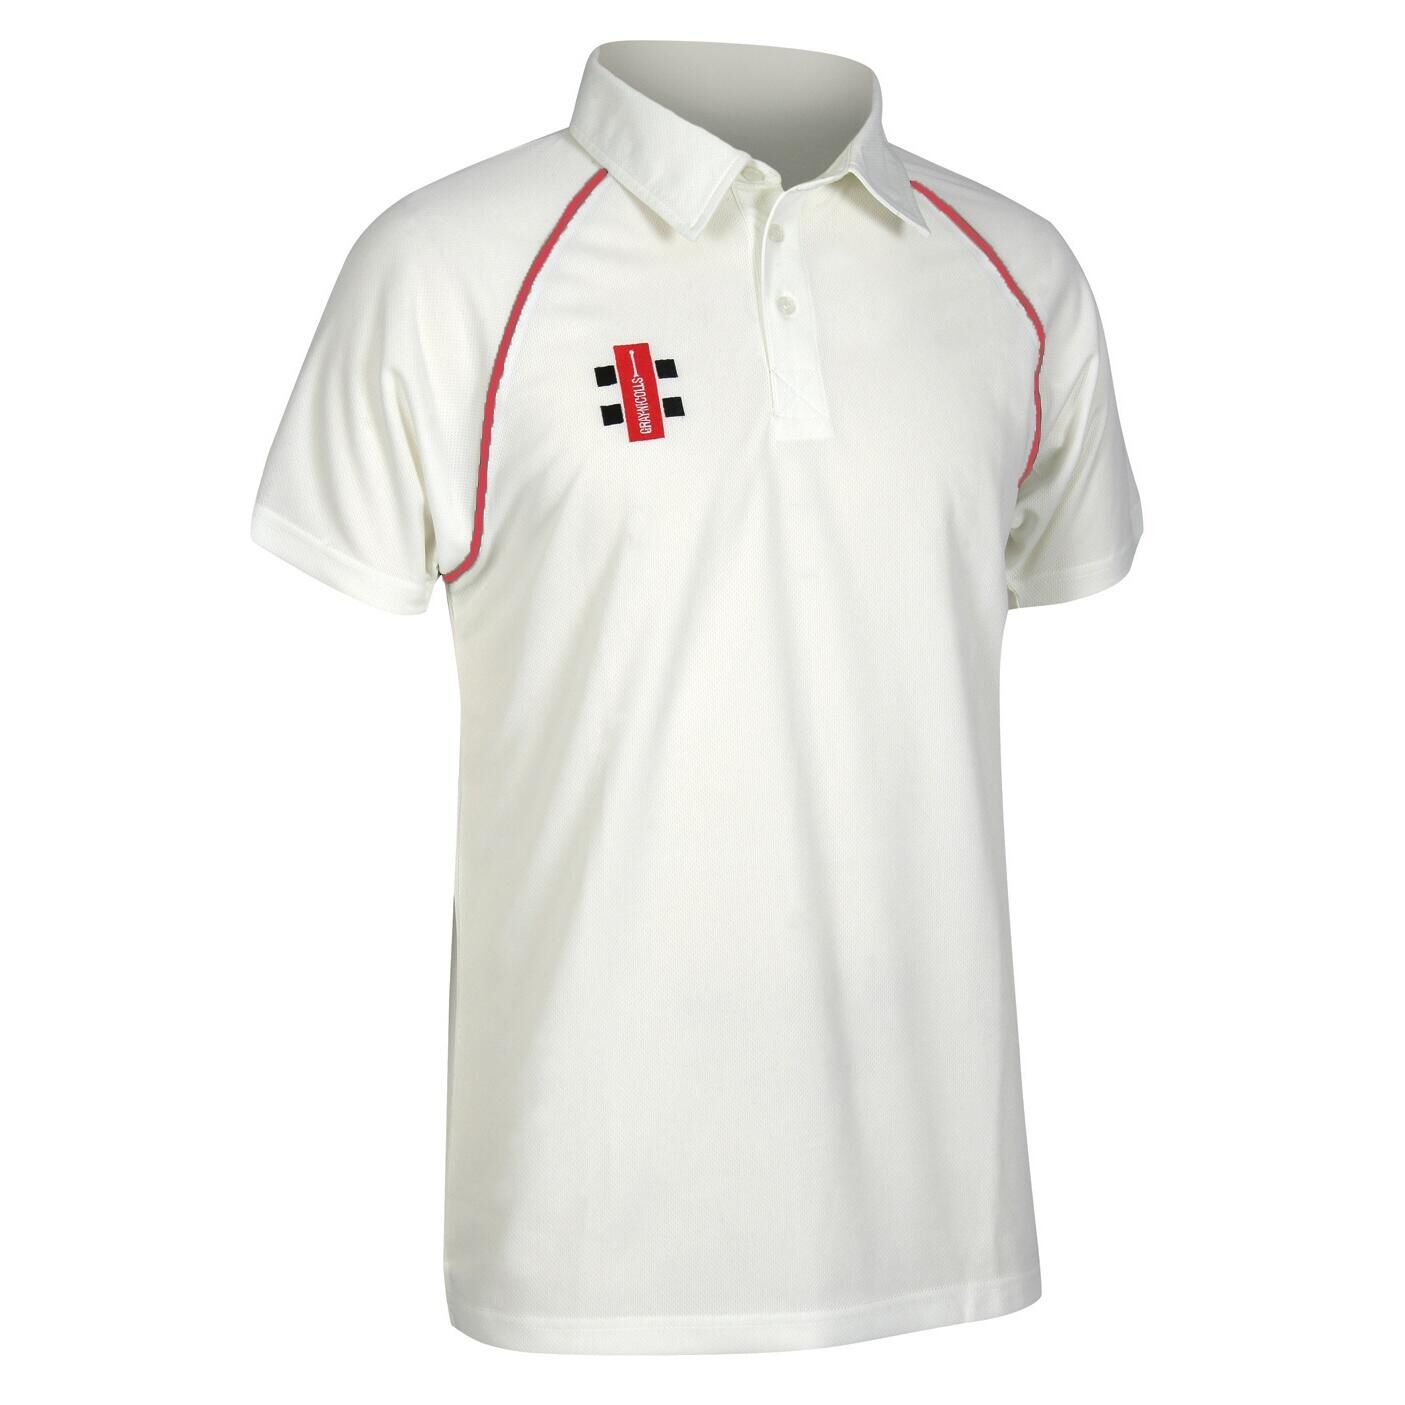 GRAY-NICOLLS Childrens/Kids Matrix Short Sleeve Cricket Shirt (Ivory/ Red)